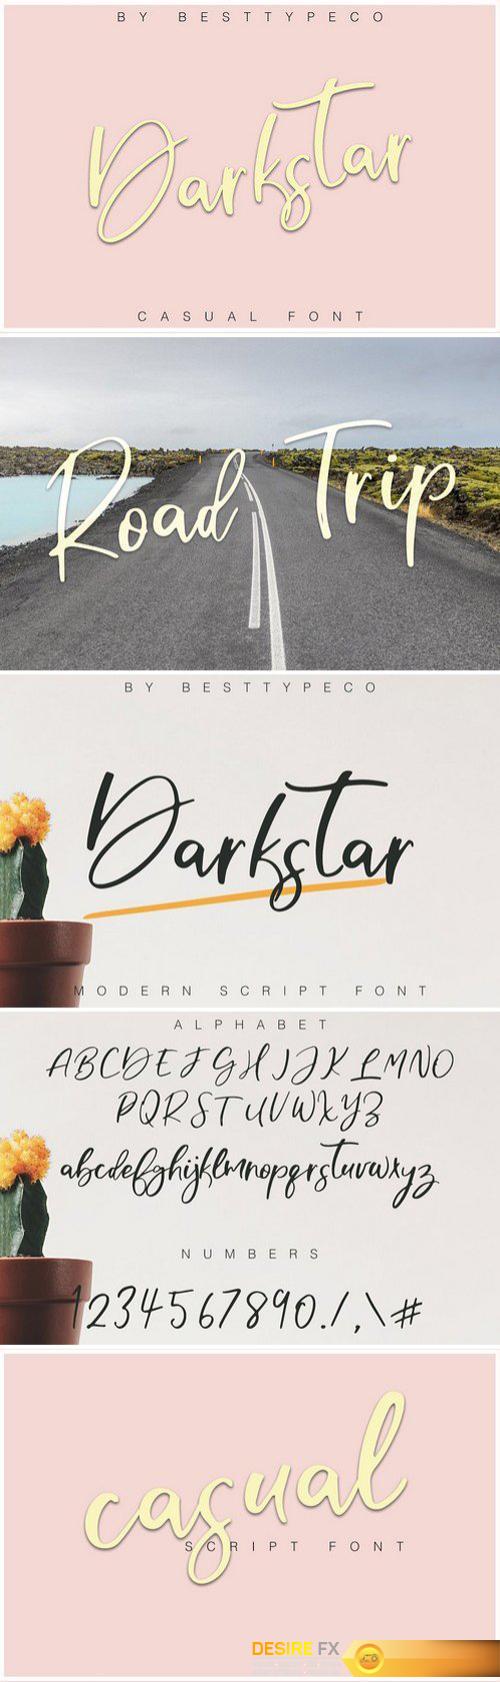 CM - Darkstar Script Font 1807100